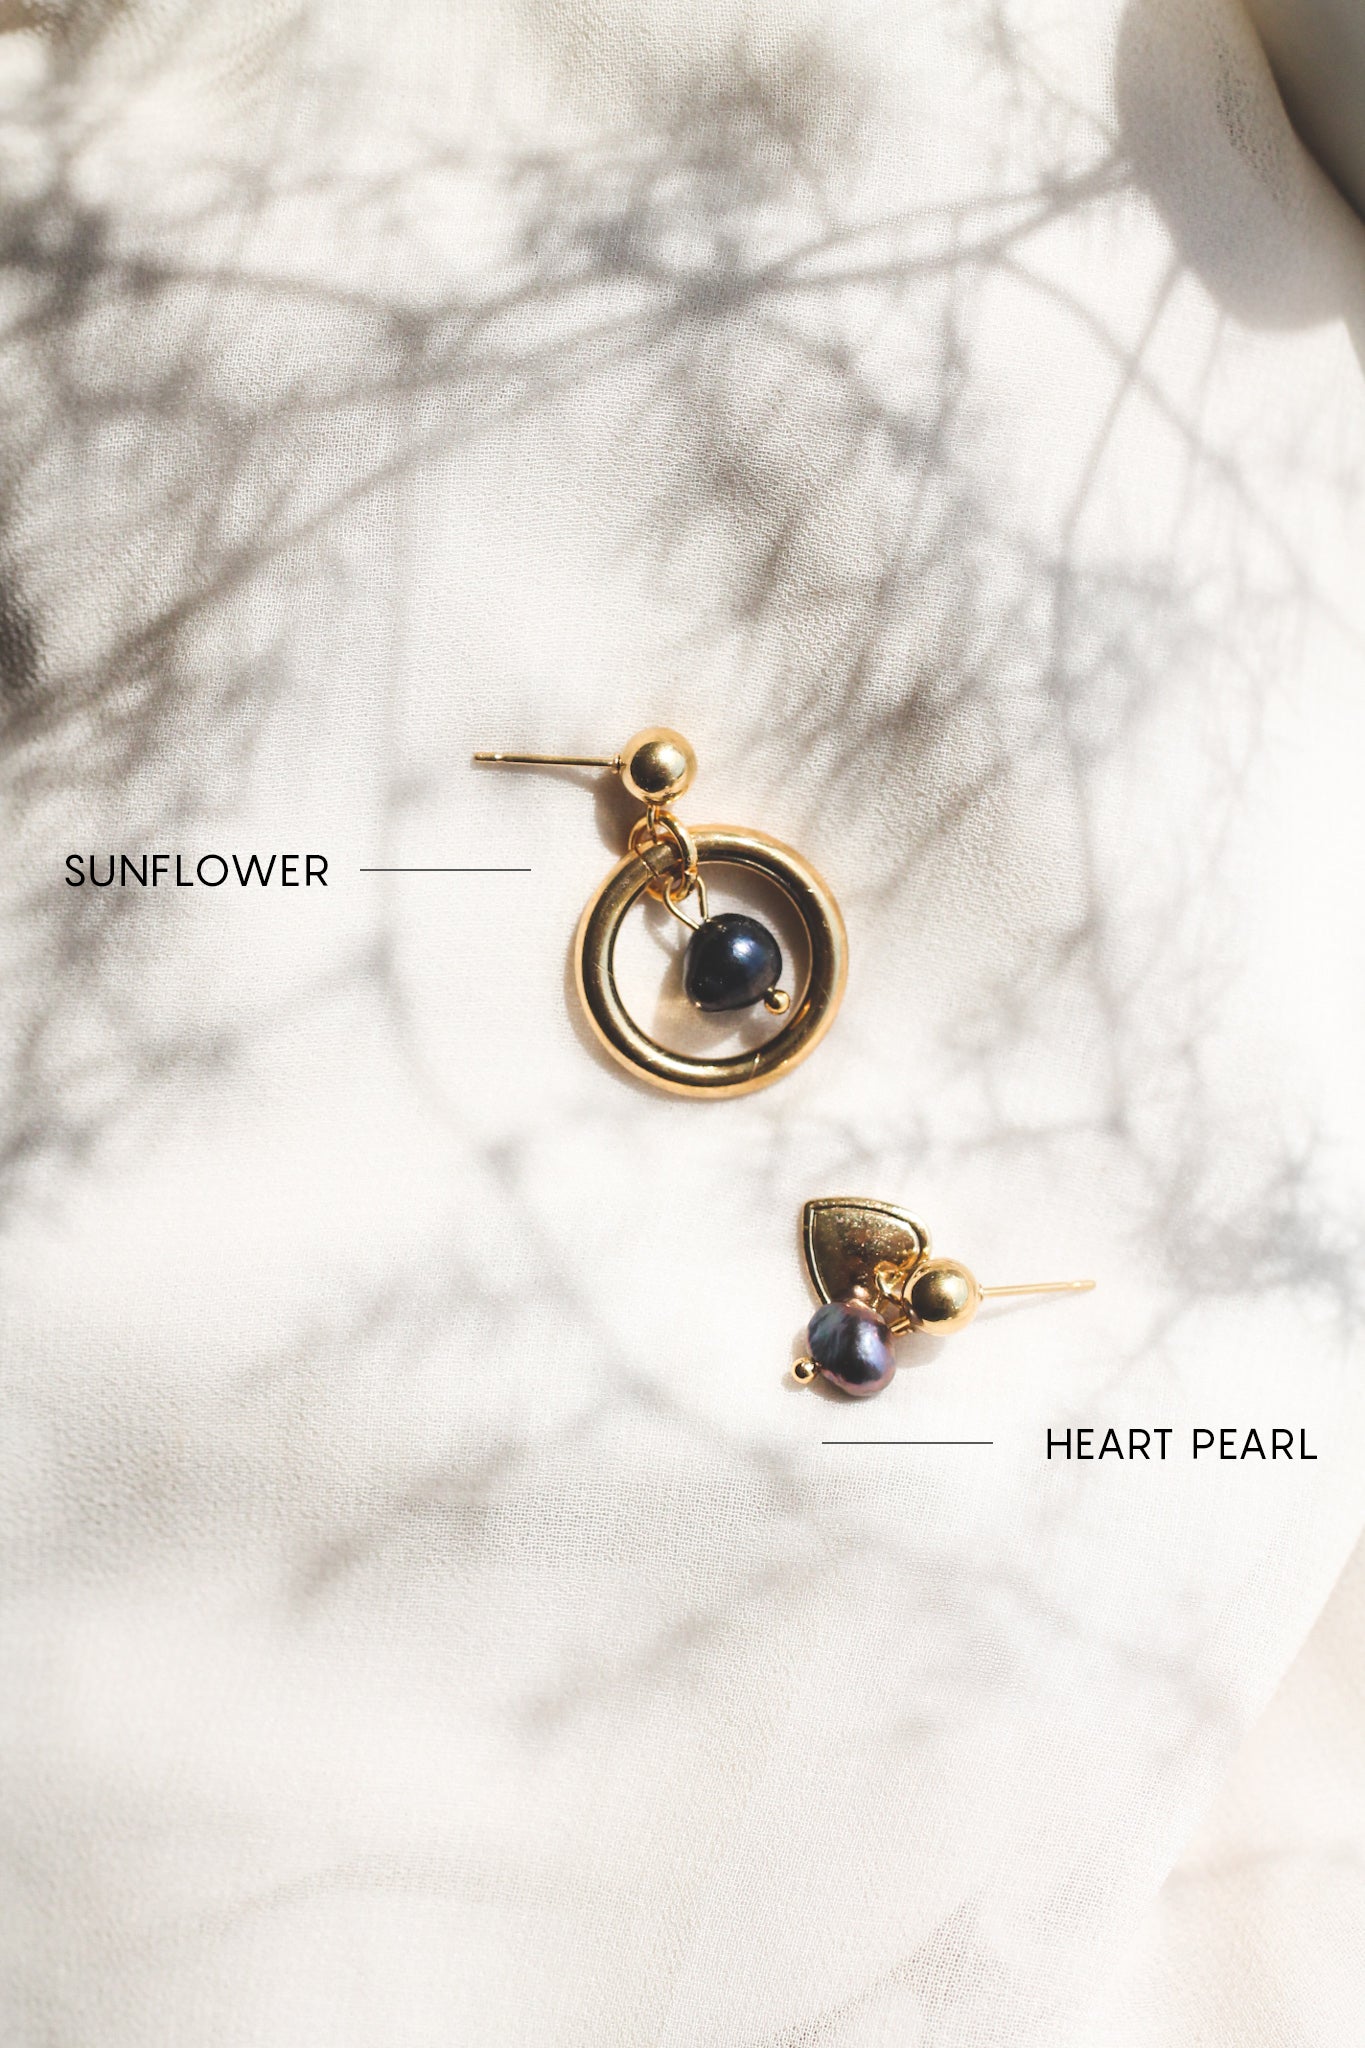 Heart Pearls